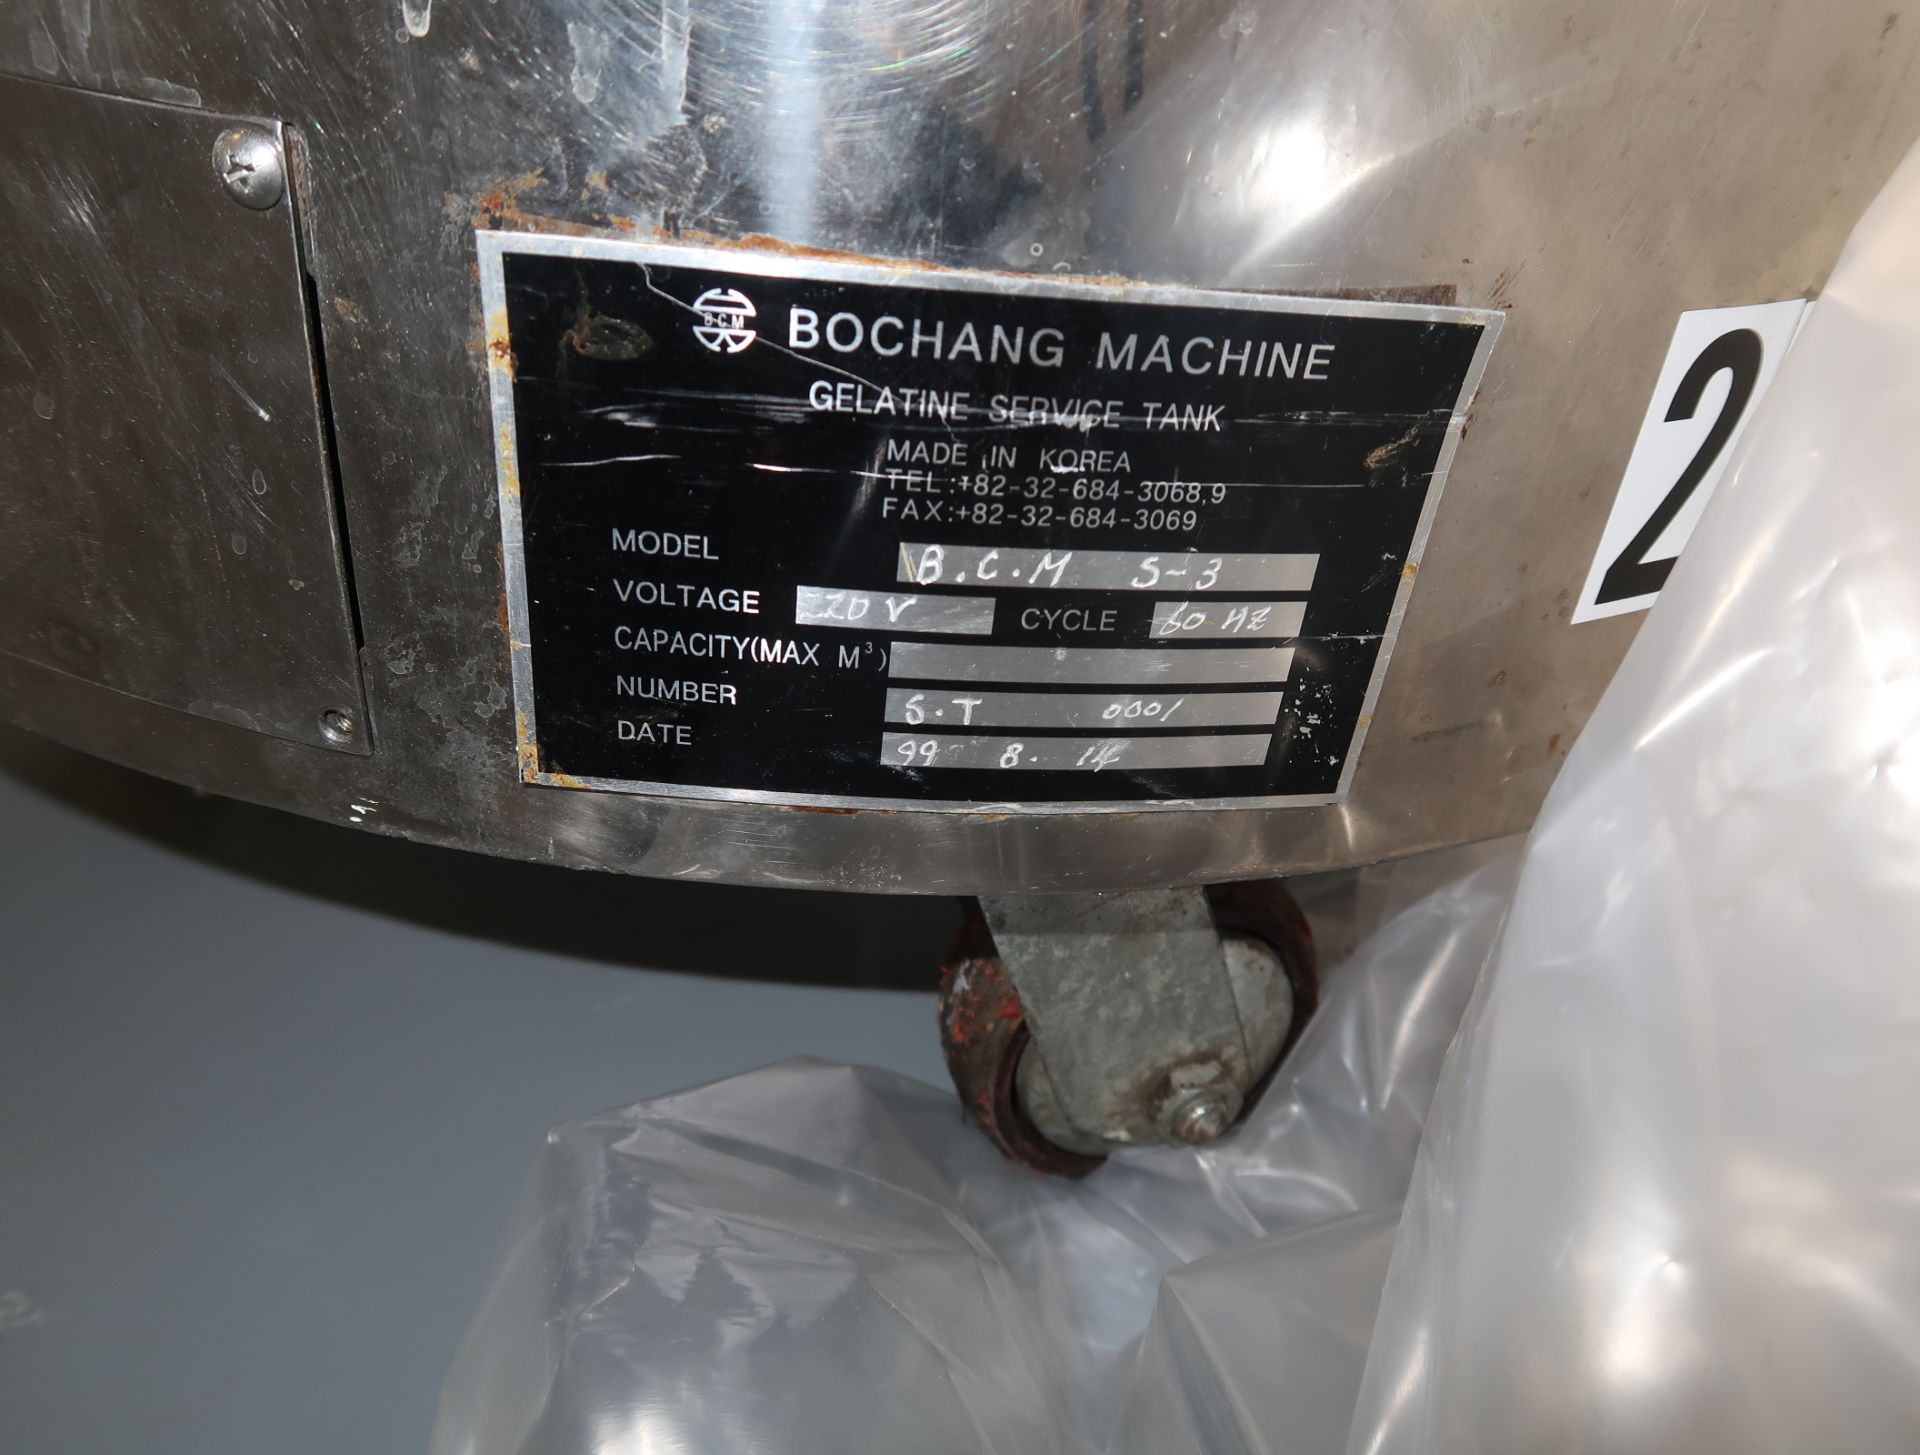 BOCHANG MACHINE MDL. BCM S-3 GELATIN SERVICE TANK - Image 2 of 2